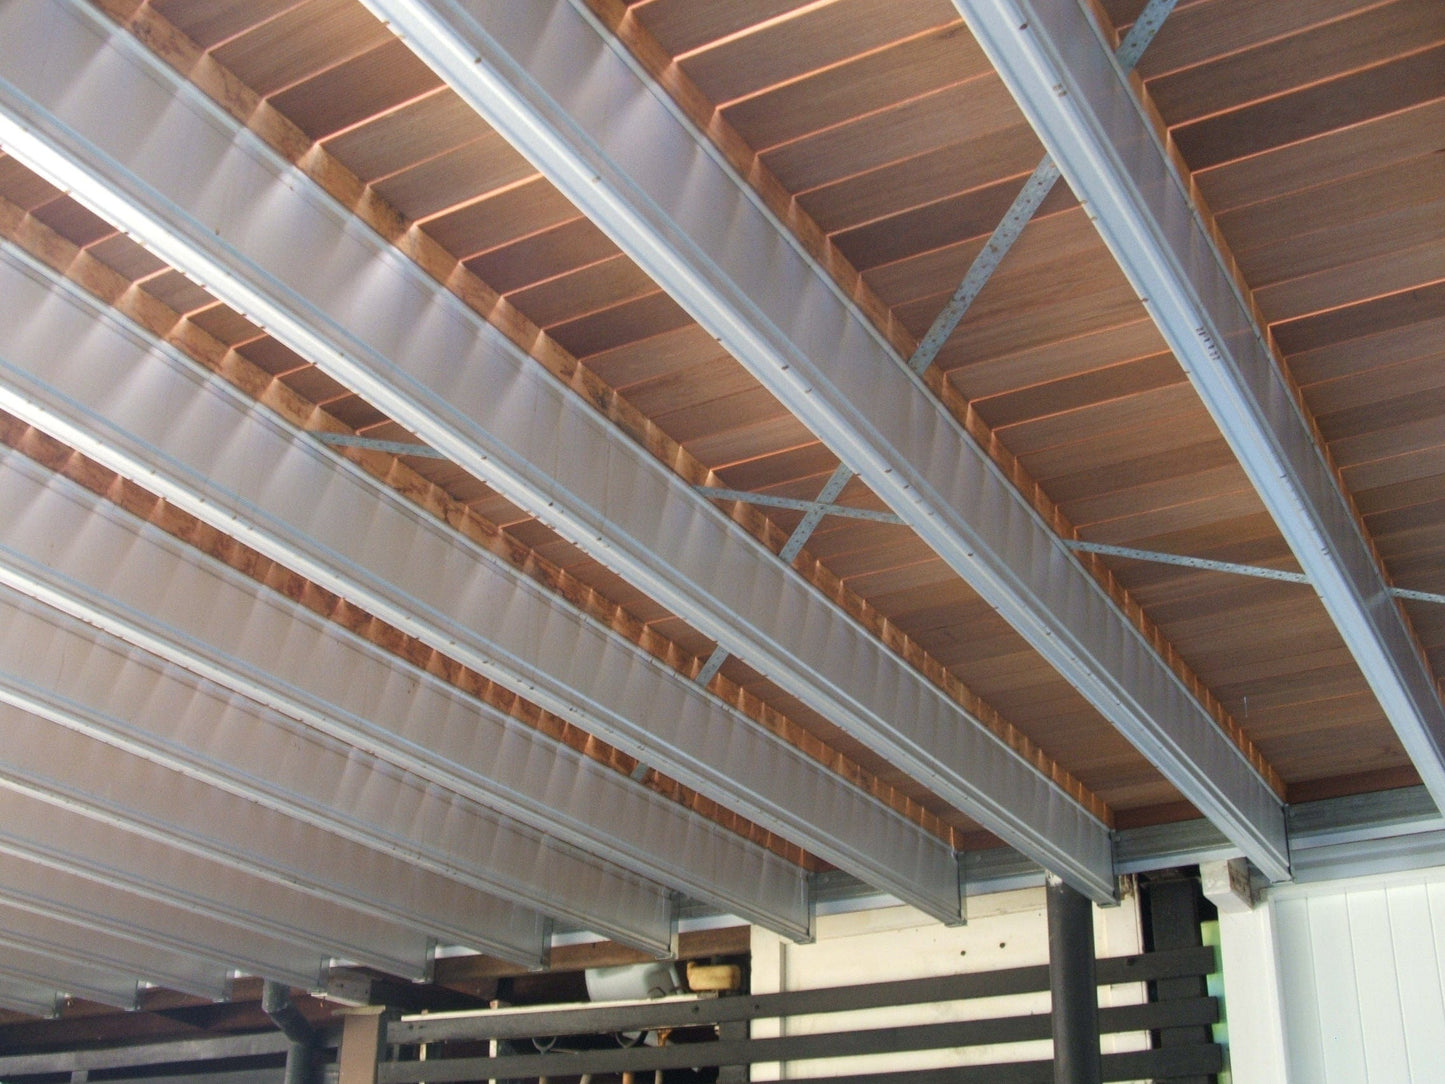 High-Set Deck - 14m x 6m-  Supply & Install QHI National